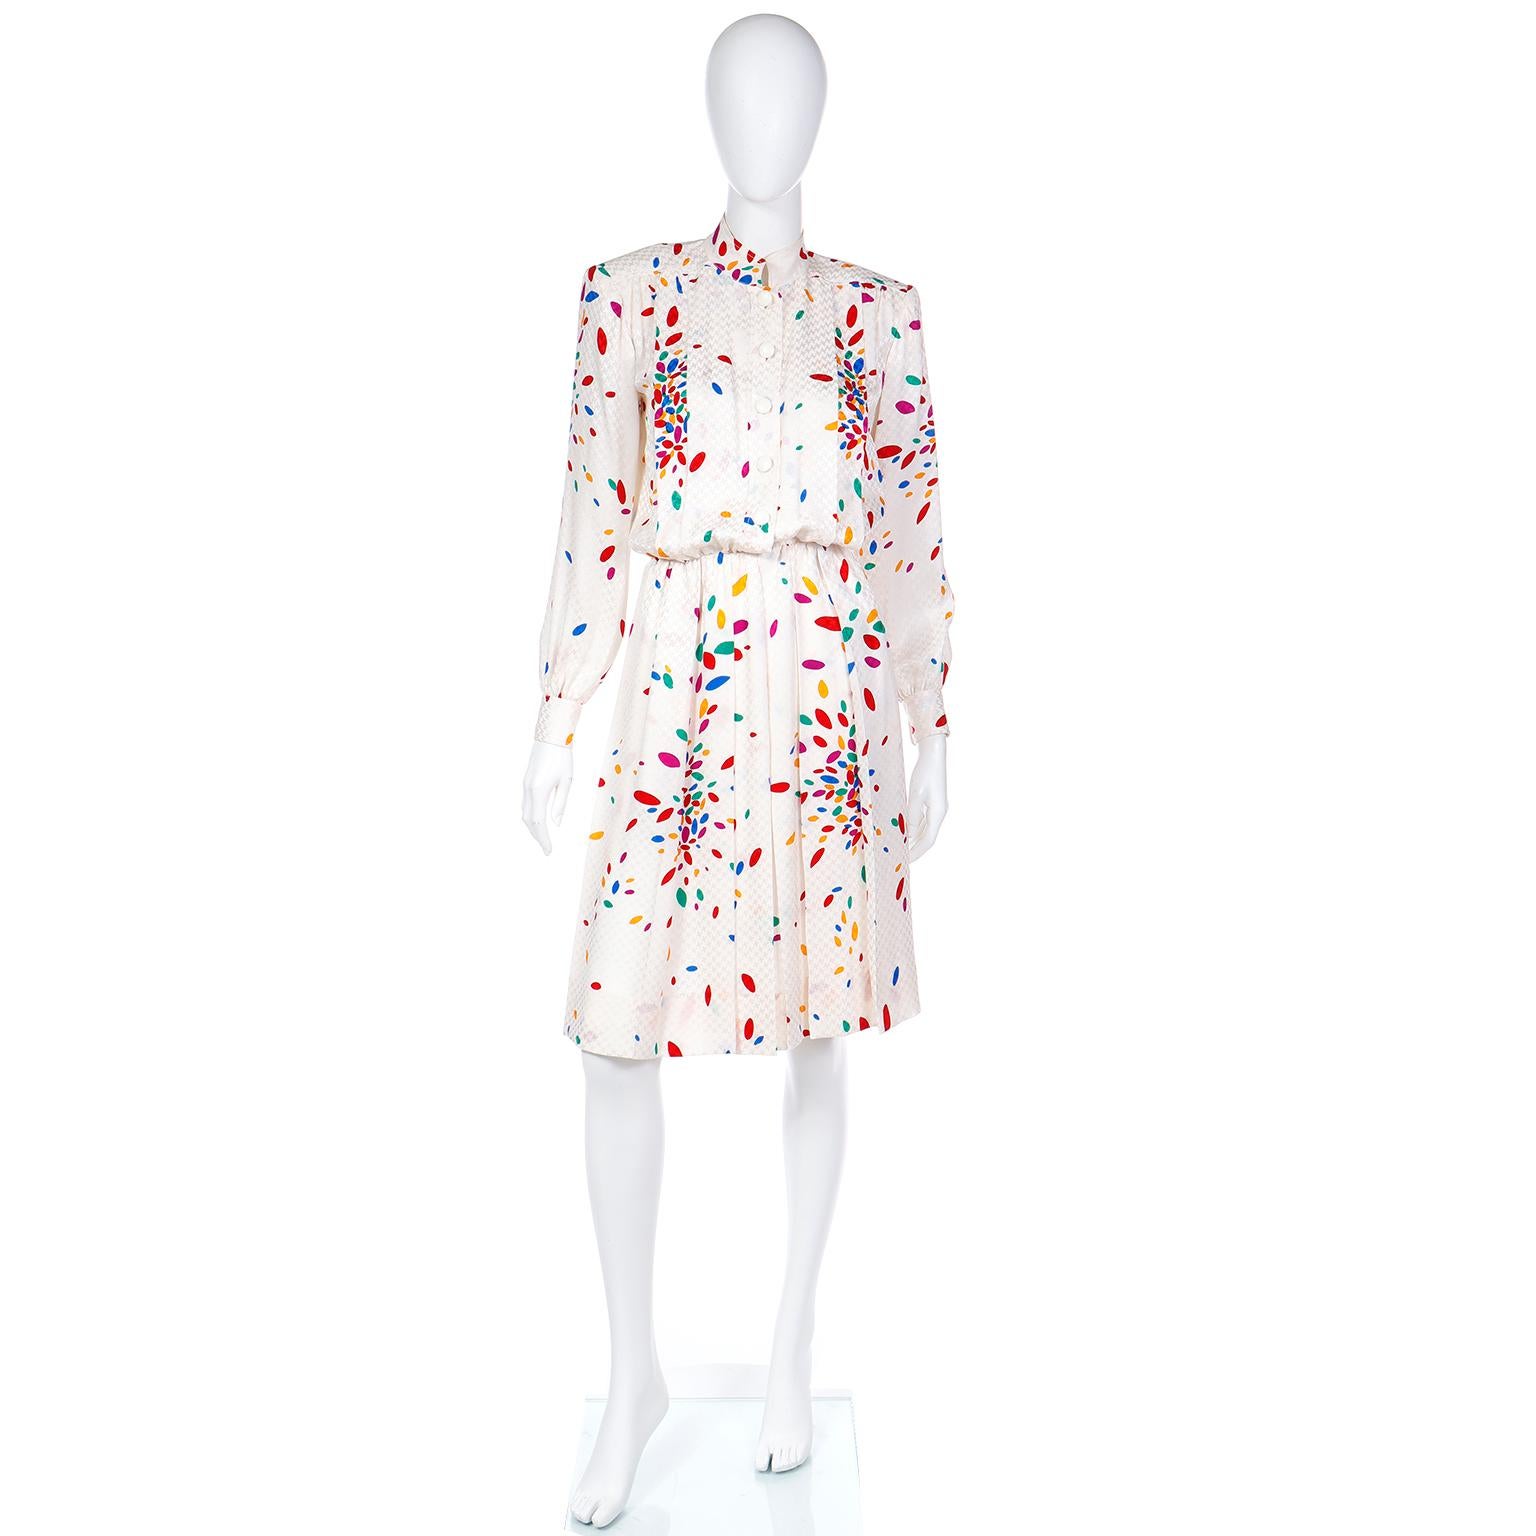 Yves Saint laurent Tonal White Print Silk Dress w Colorful Ovals & Polka Dots For Sale 2